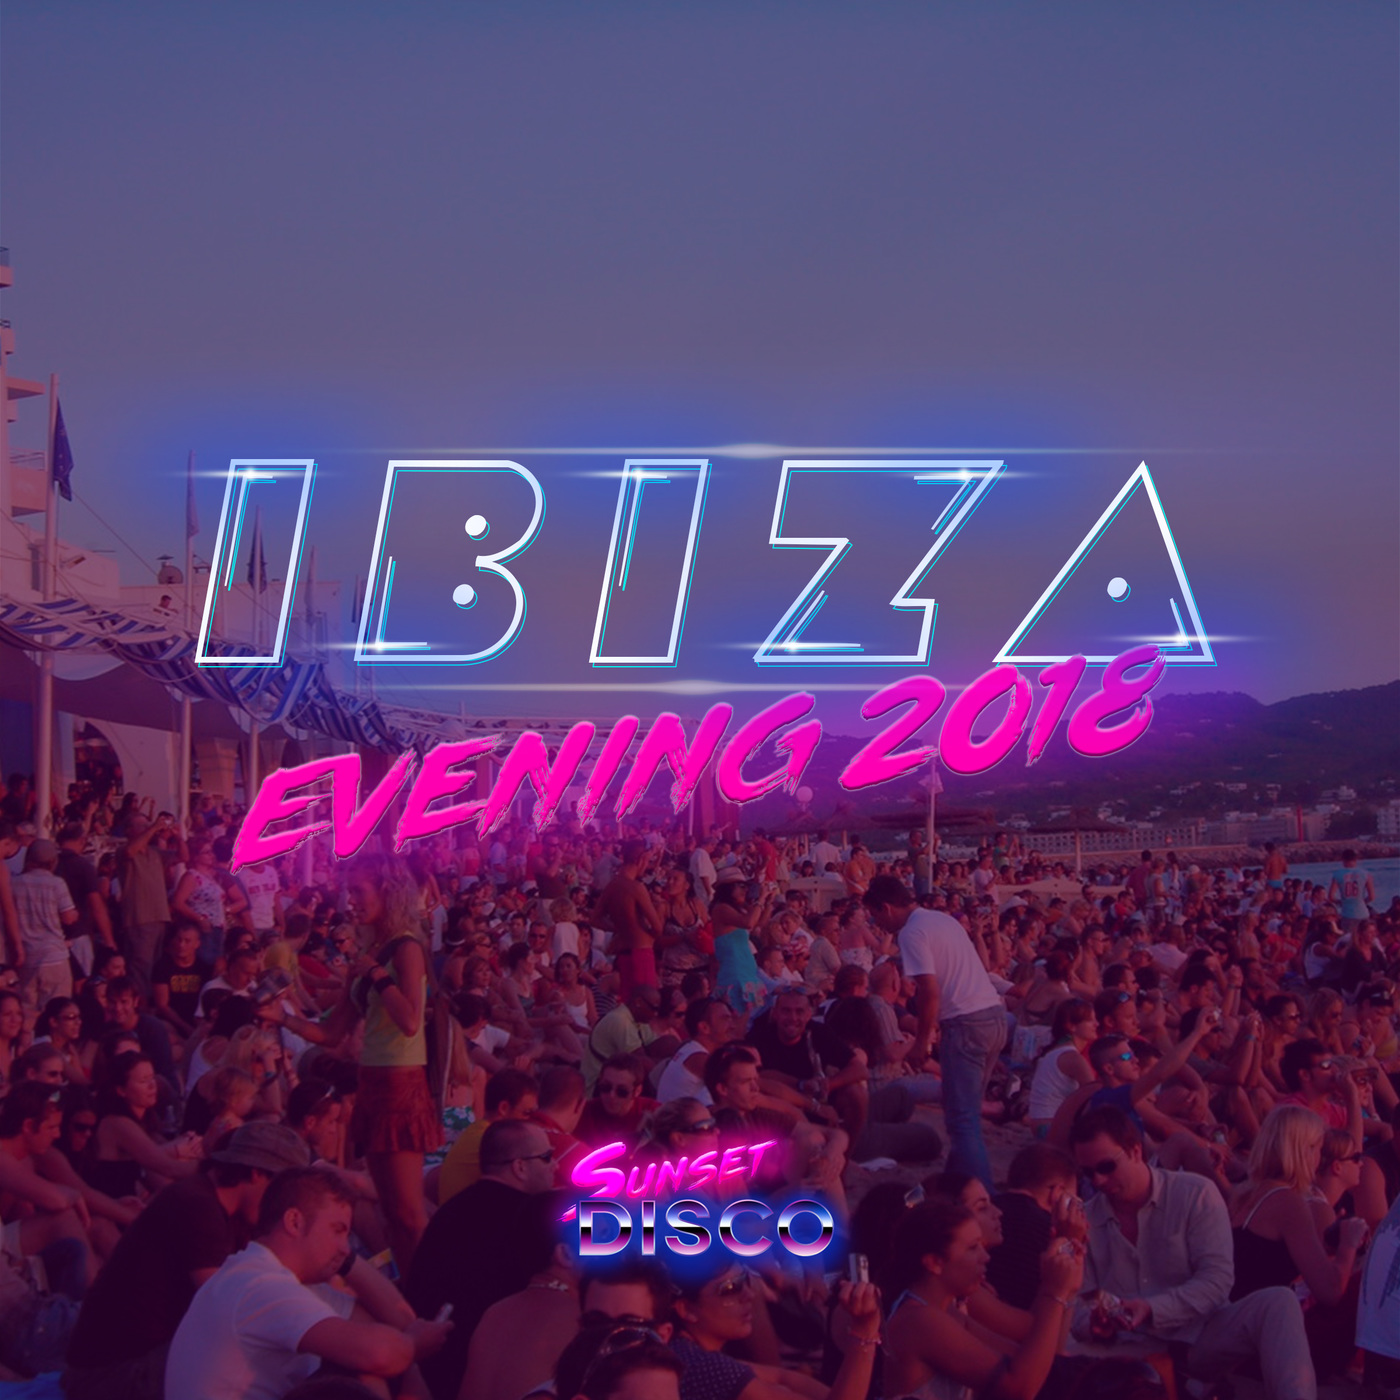 VA - Sunset Disco Ibiza Evening 2018 / Sunset Disco